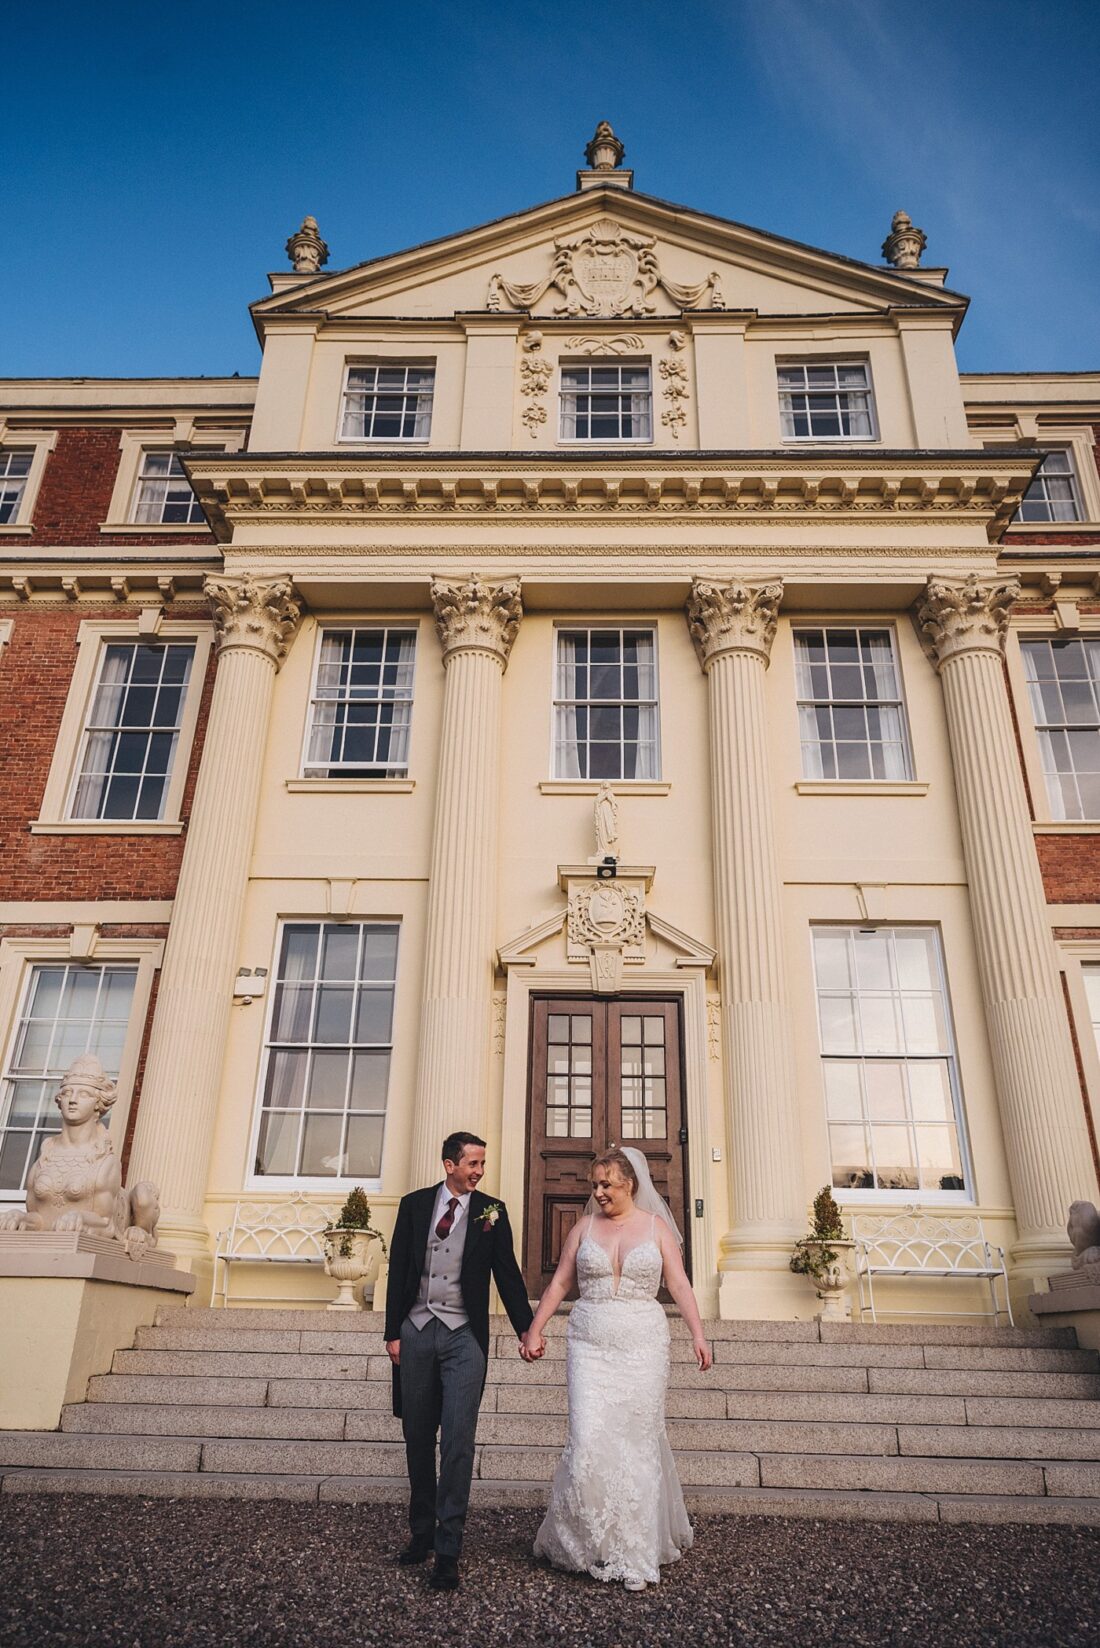 Hawkstone Hall wedding photography